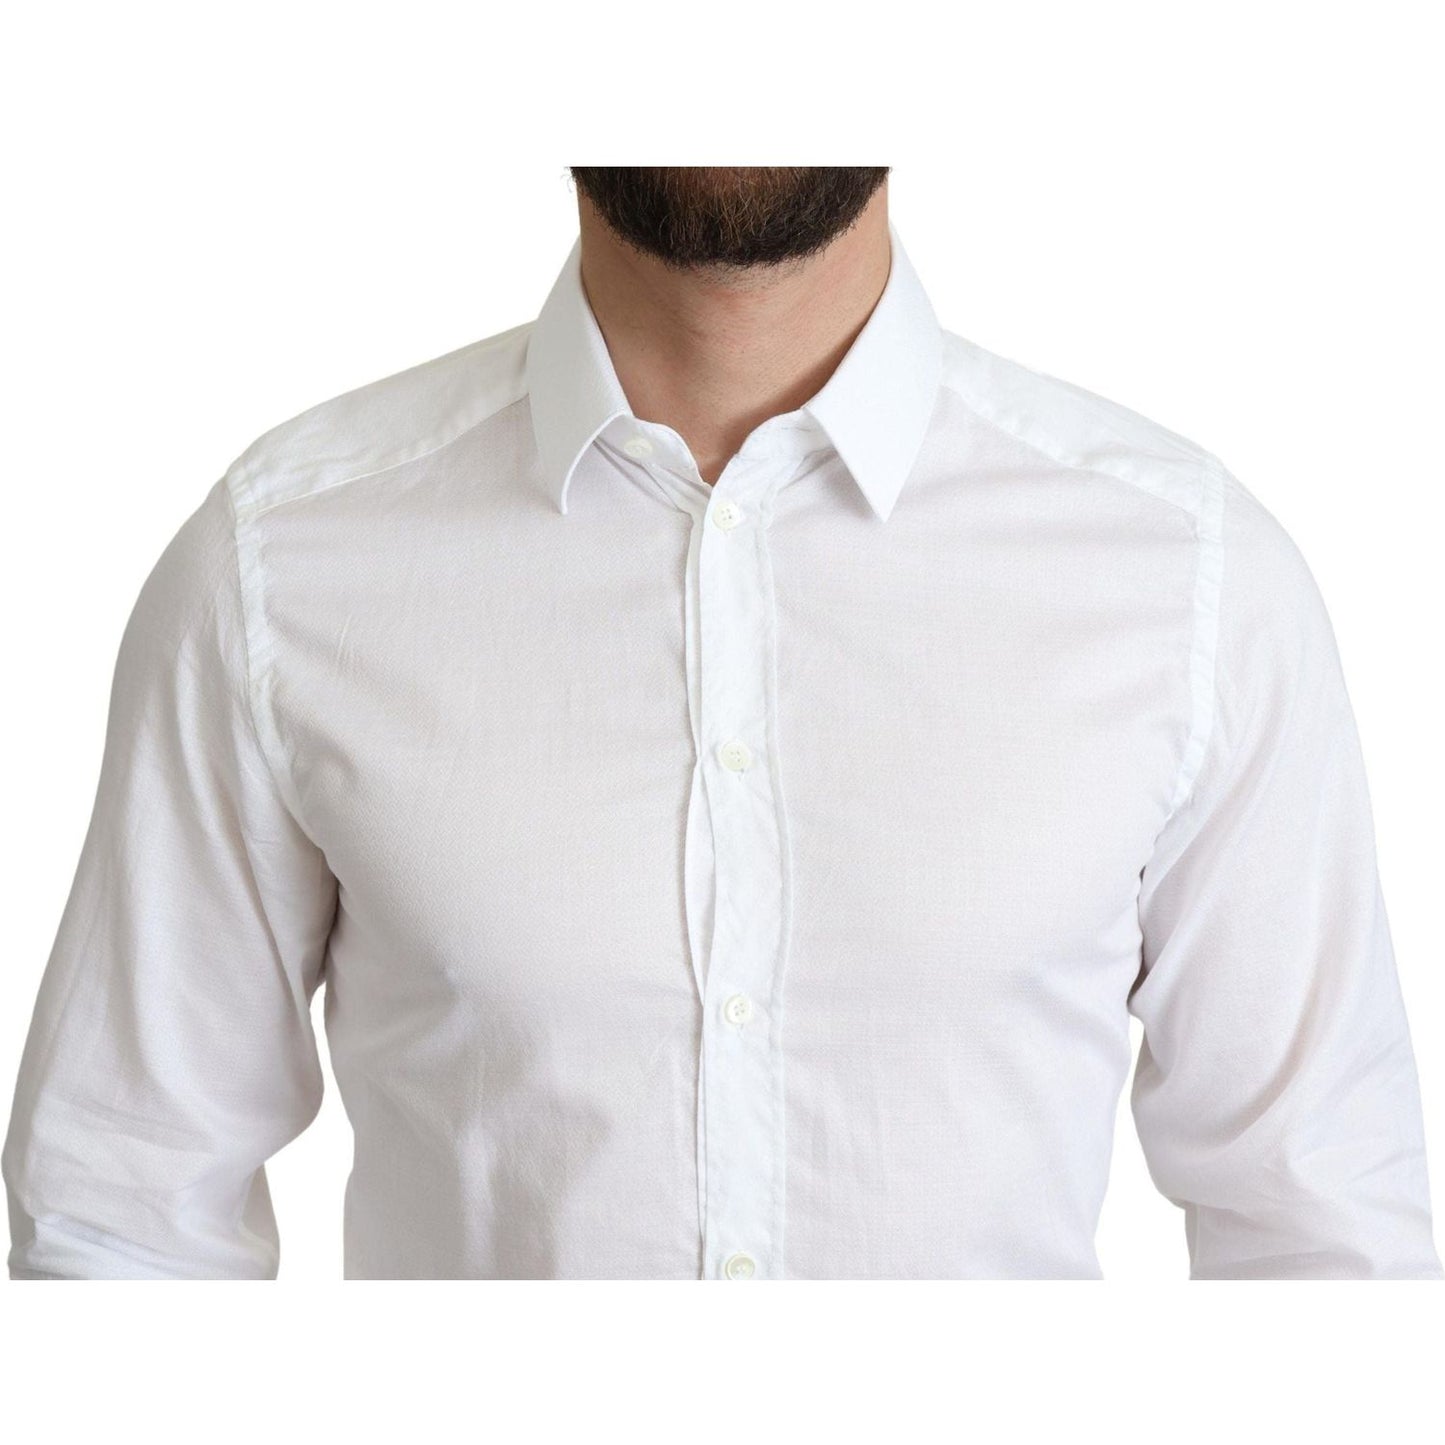 Dolce & Gabbana Elegant White Cotton Dress Shirt Slim Fit white-cotton-long-sleeves-formal-shirt